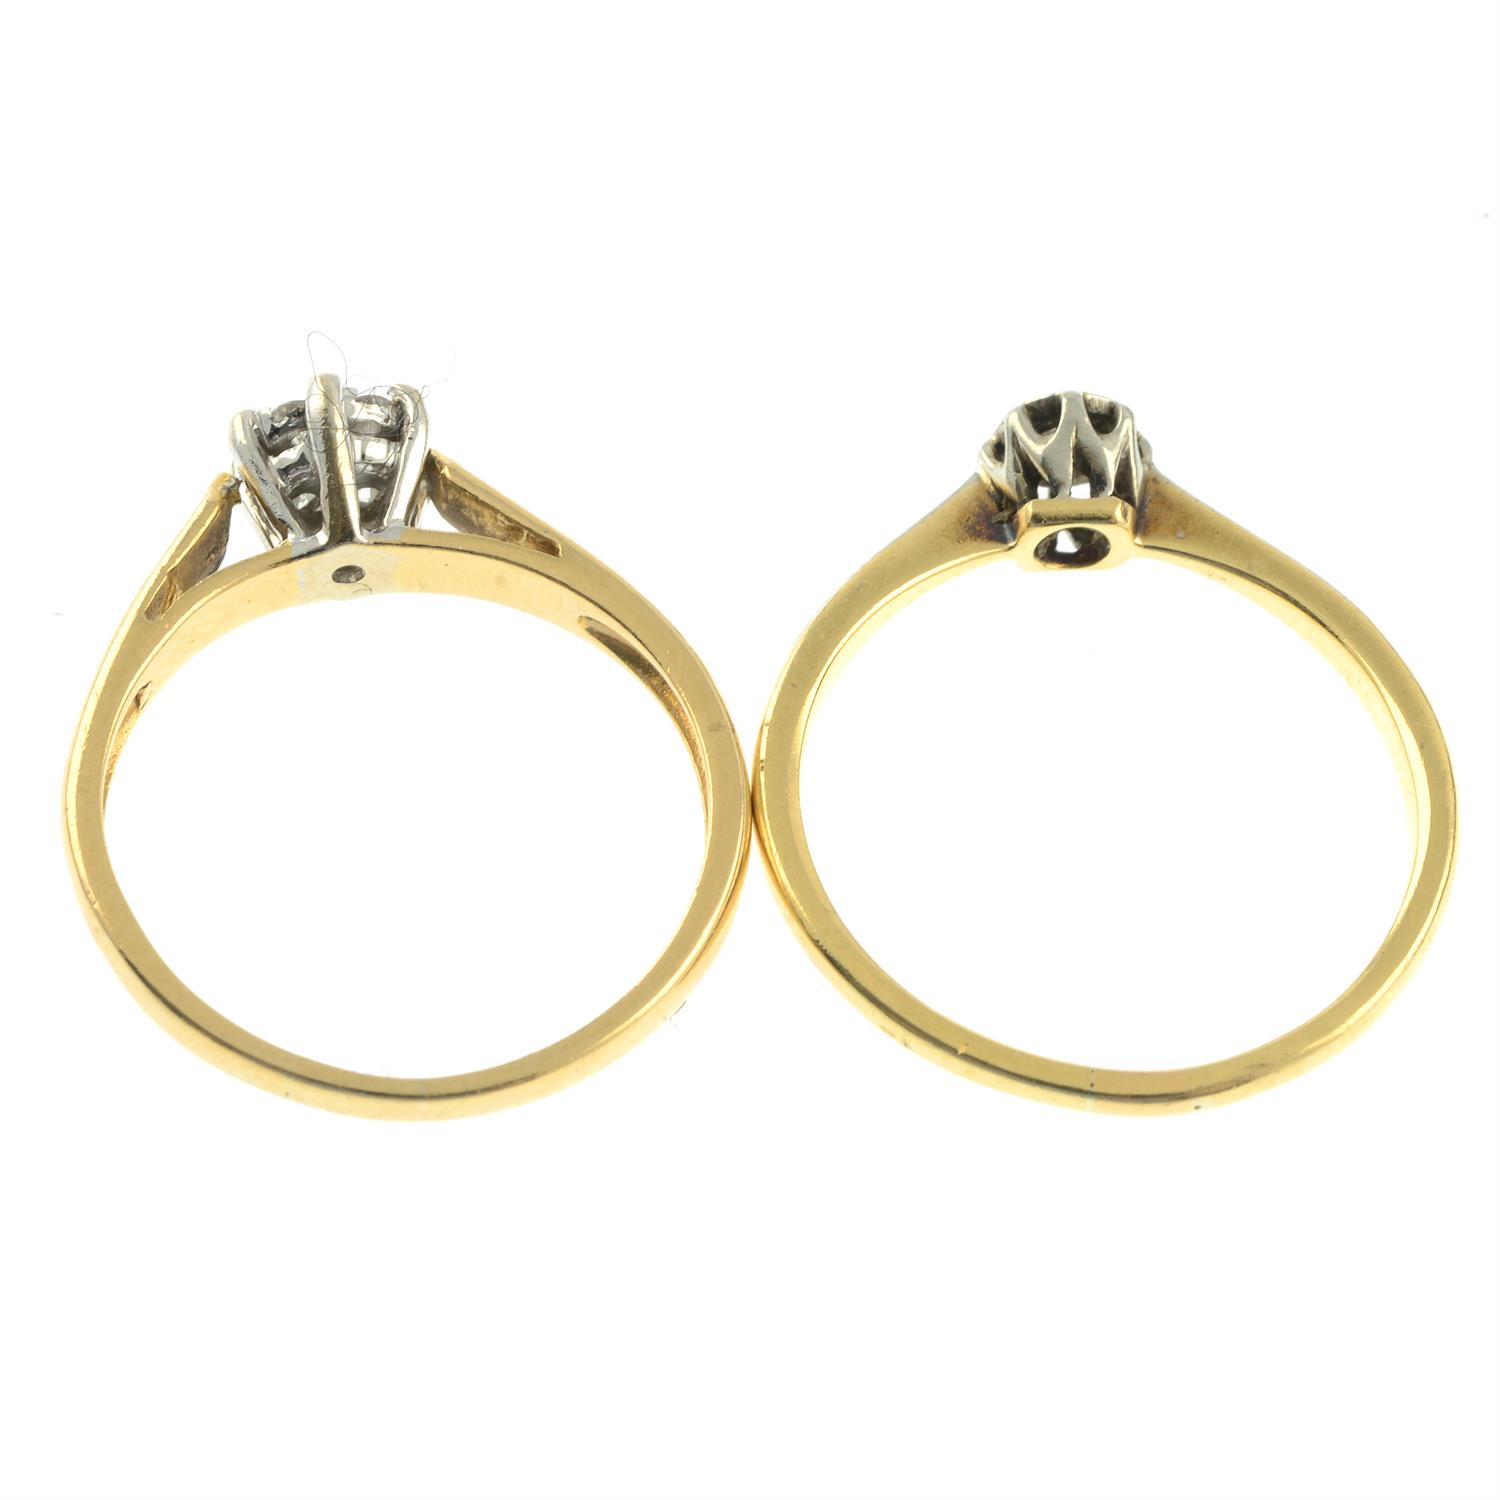 Two diamond rings. - Image 2 of 2